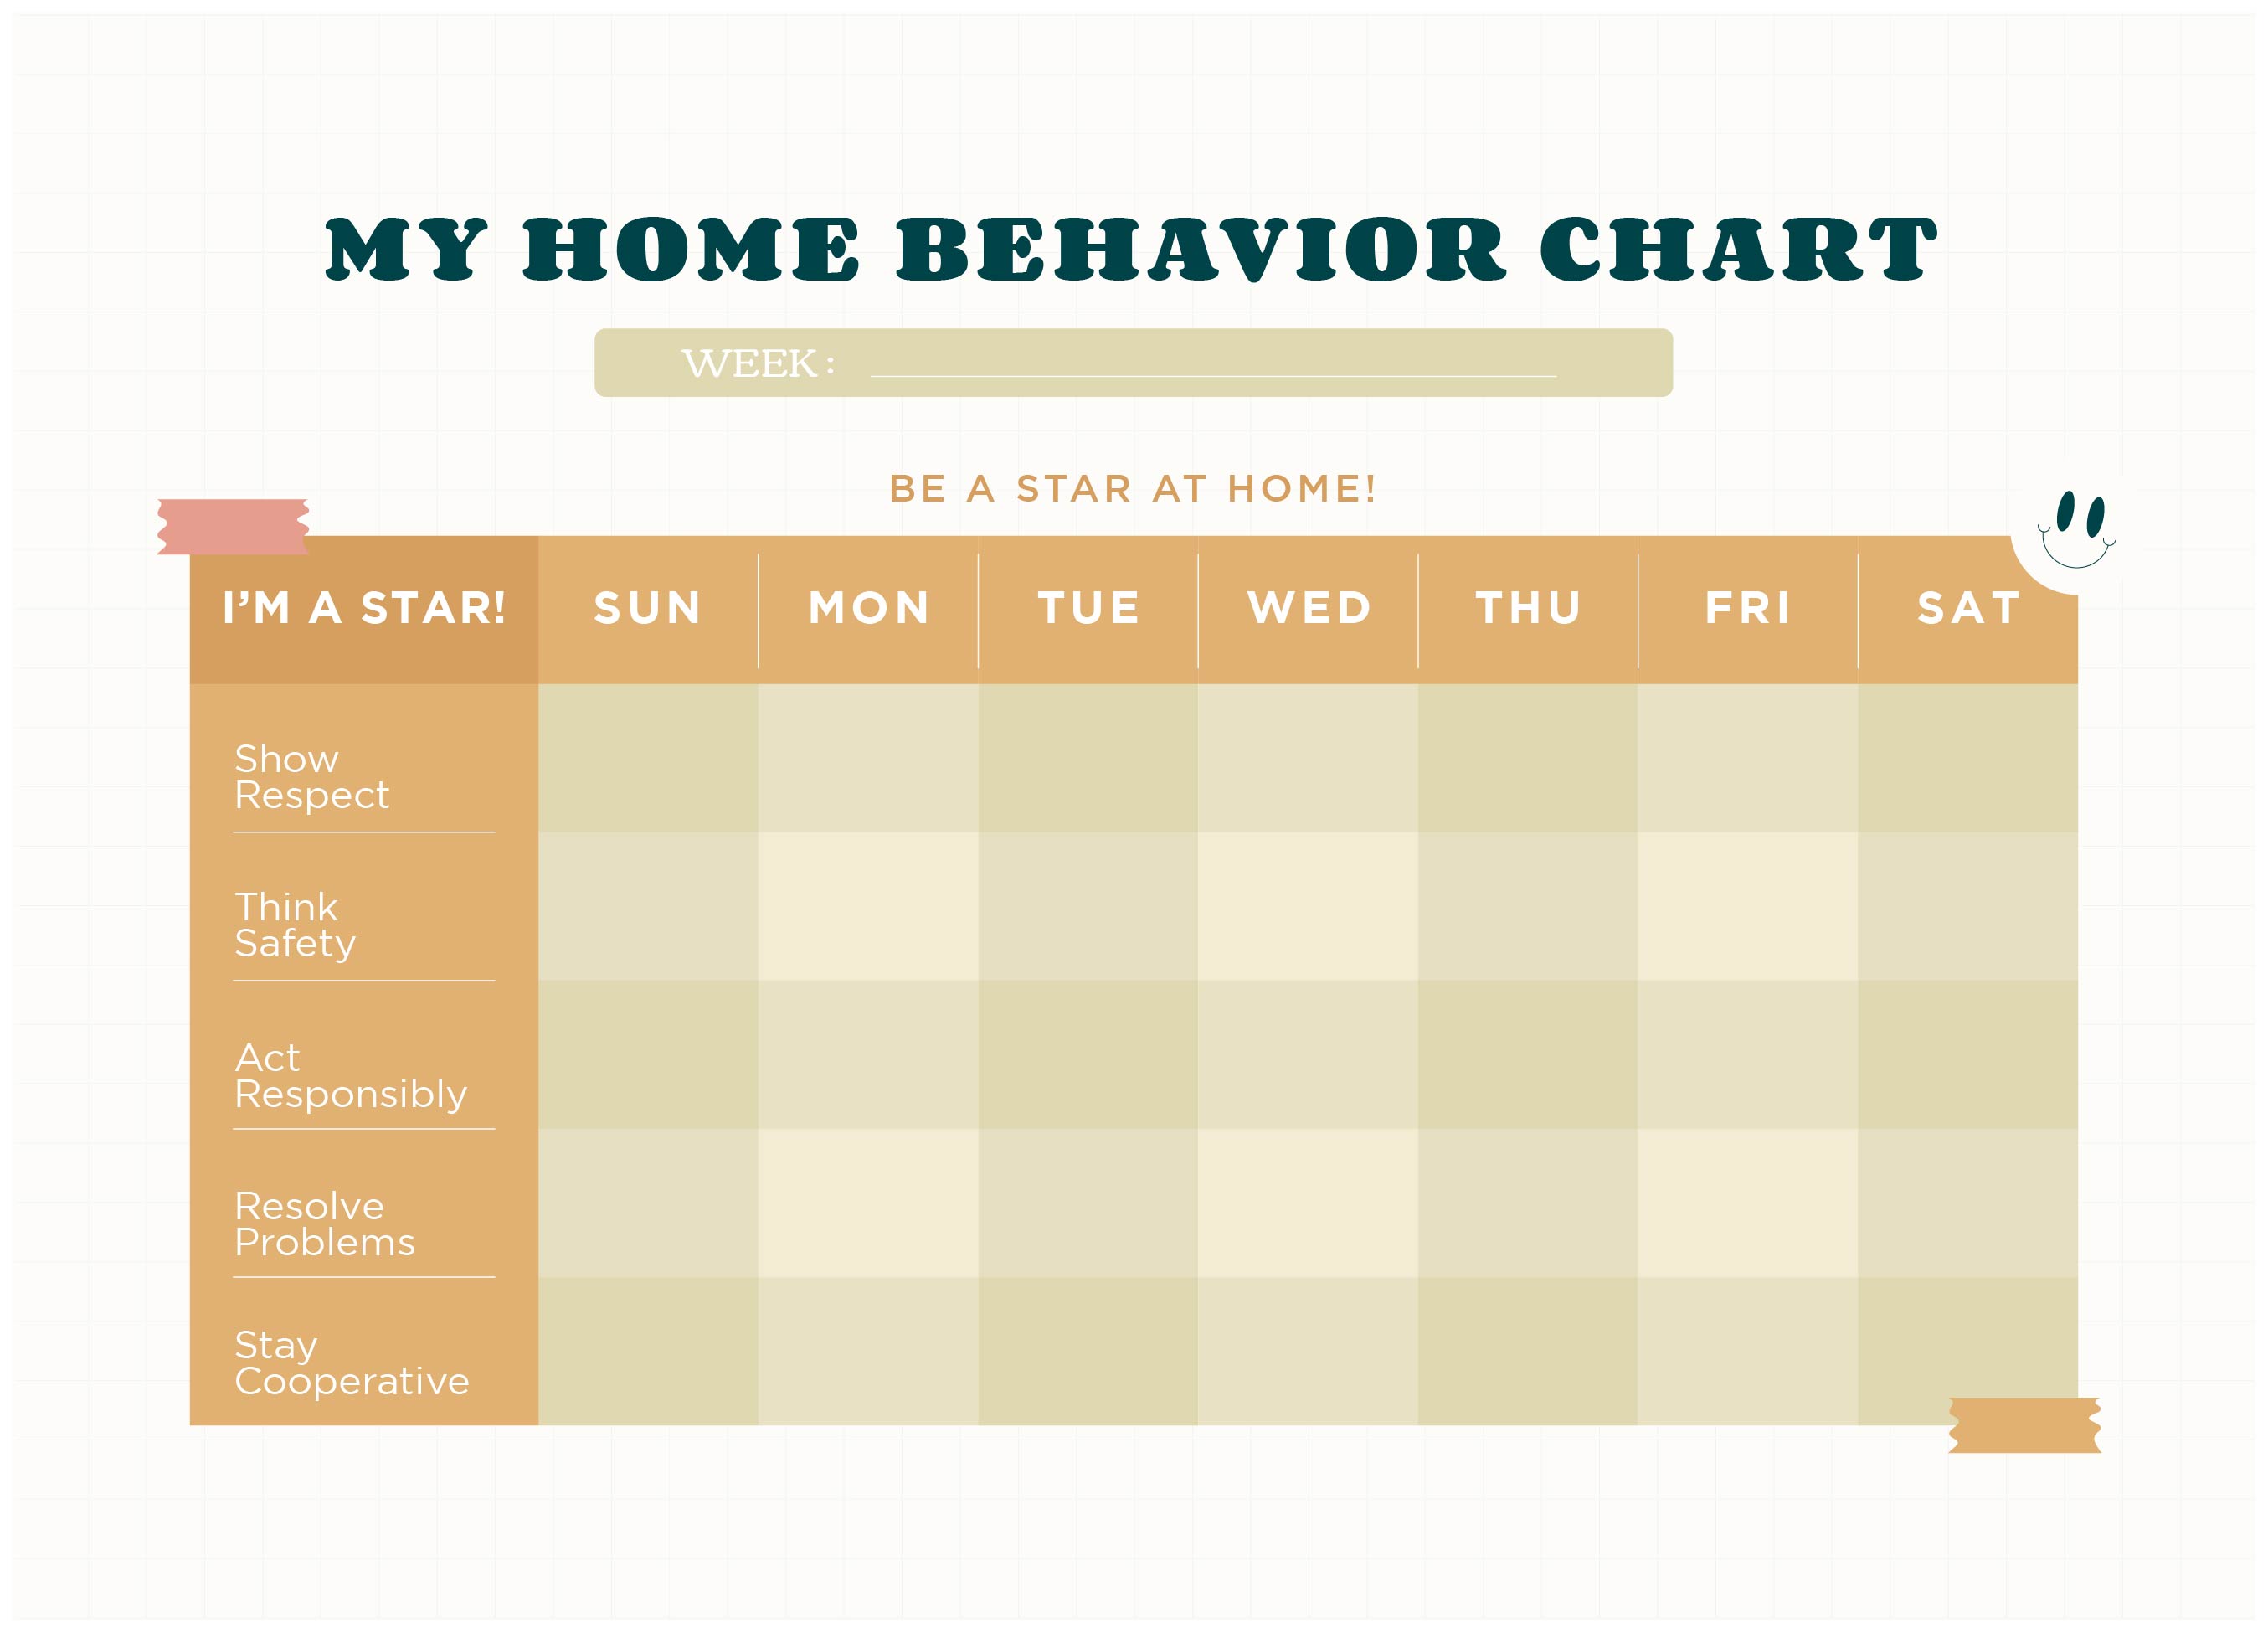 At Home Behavior Chart